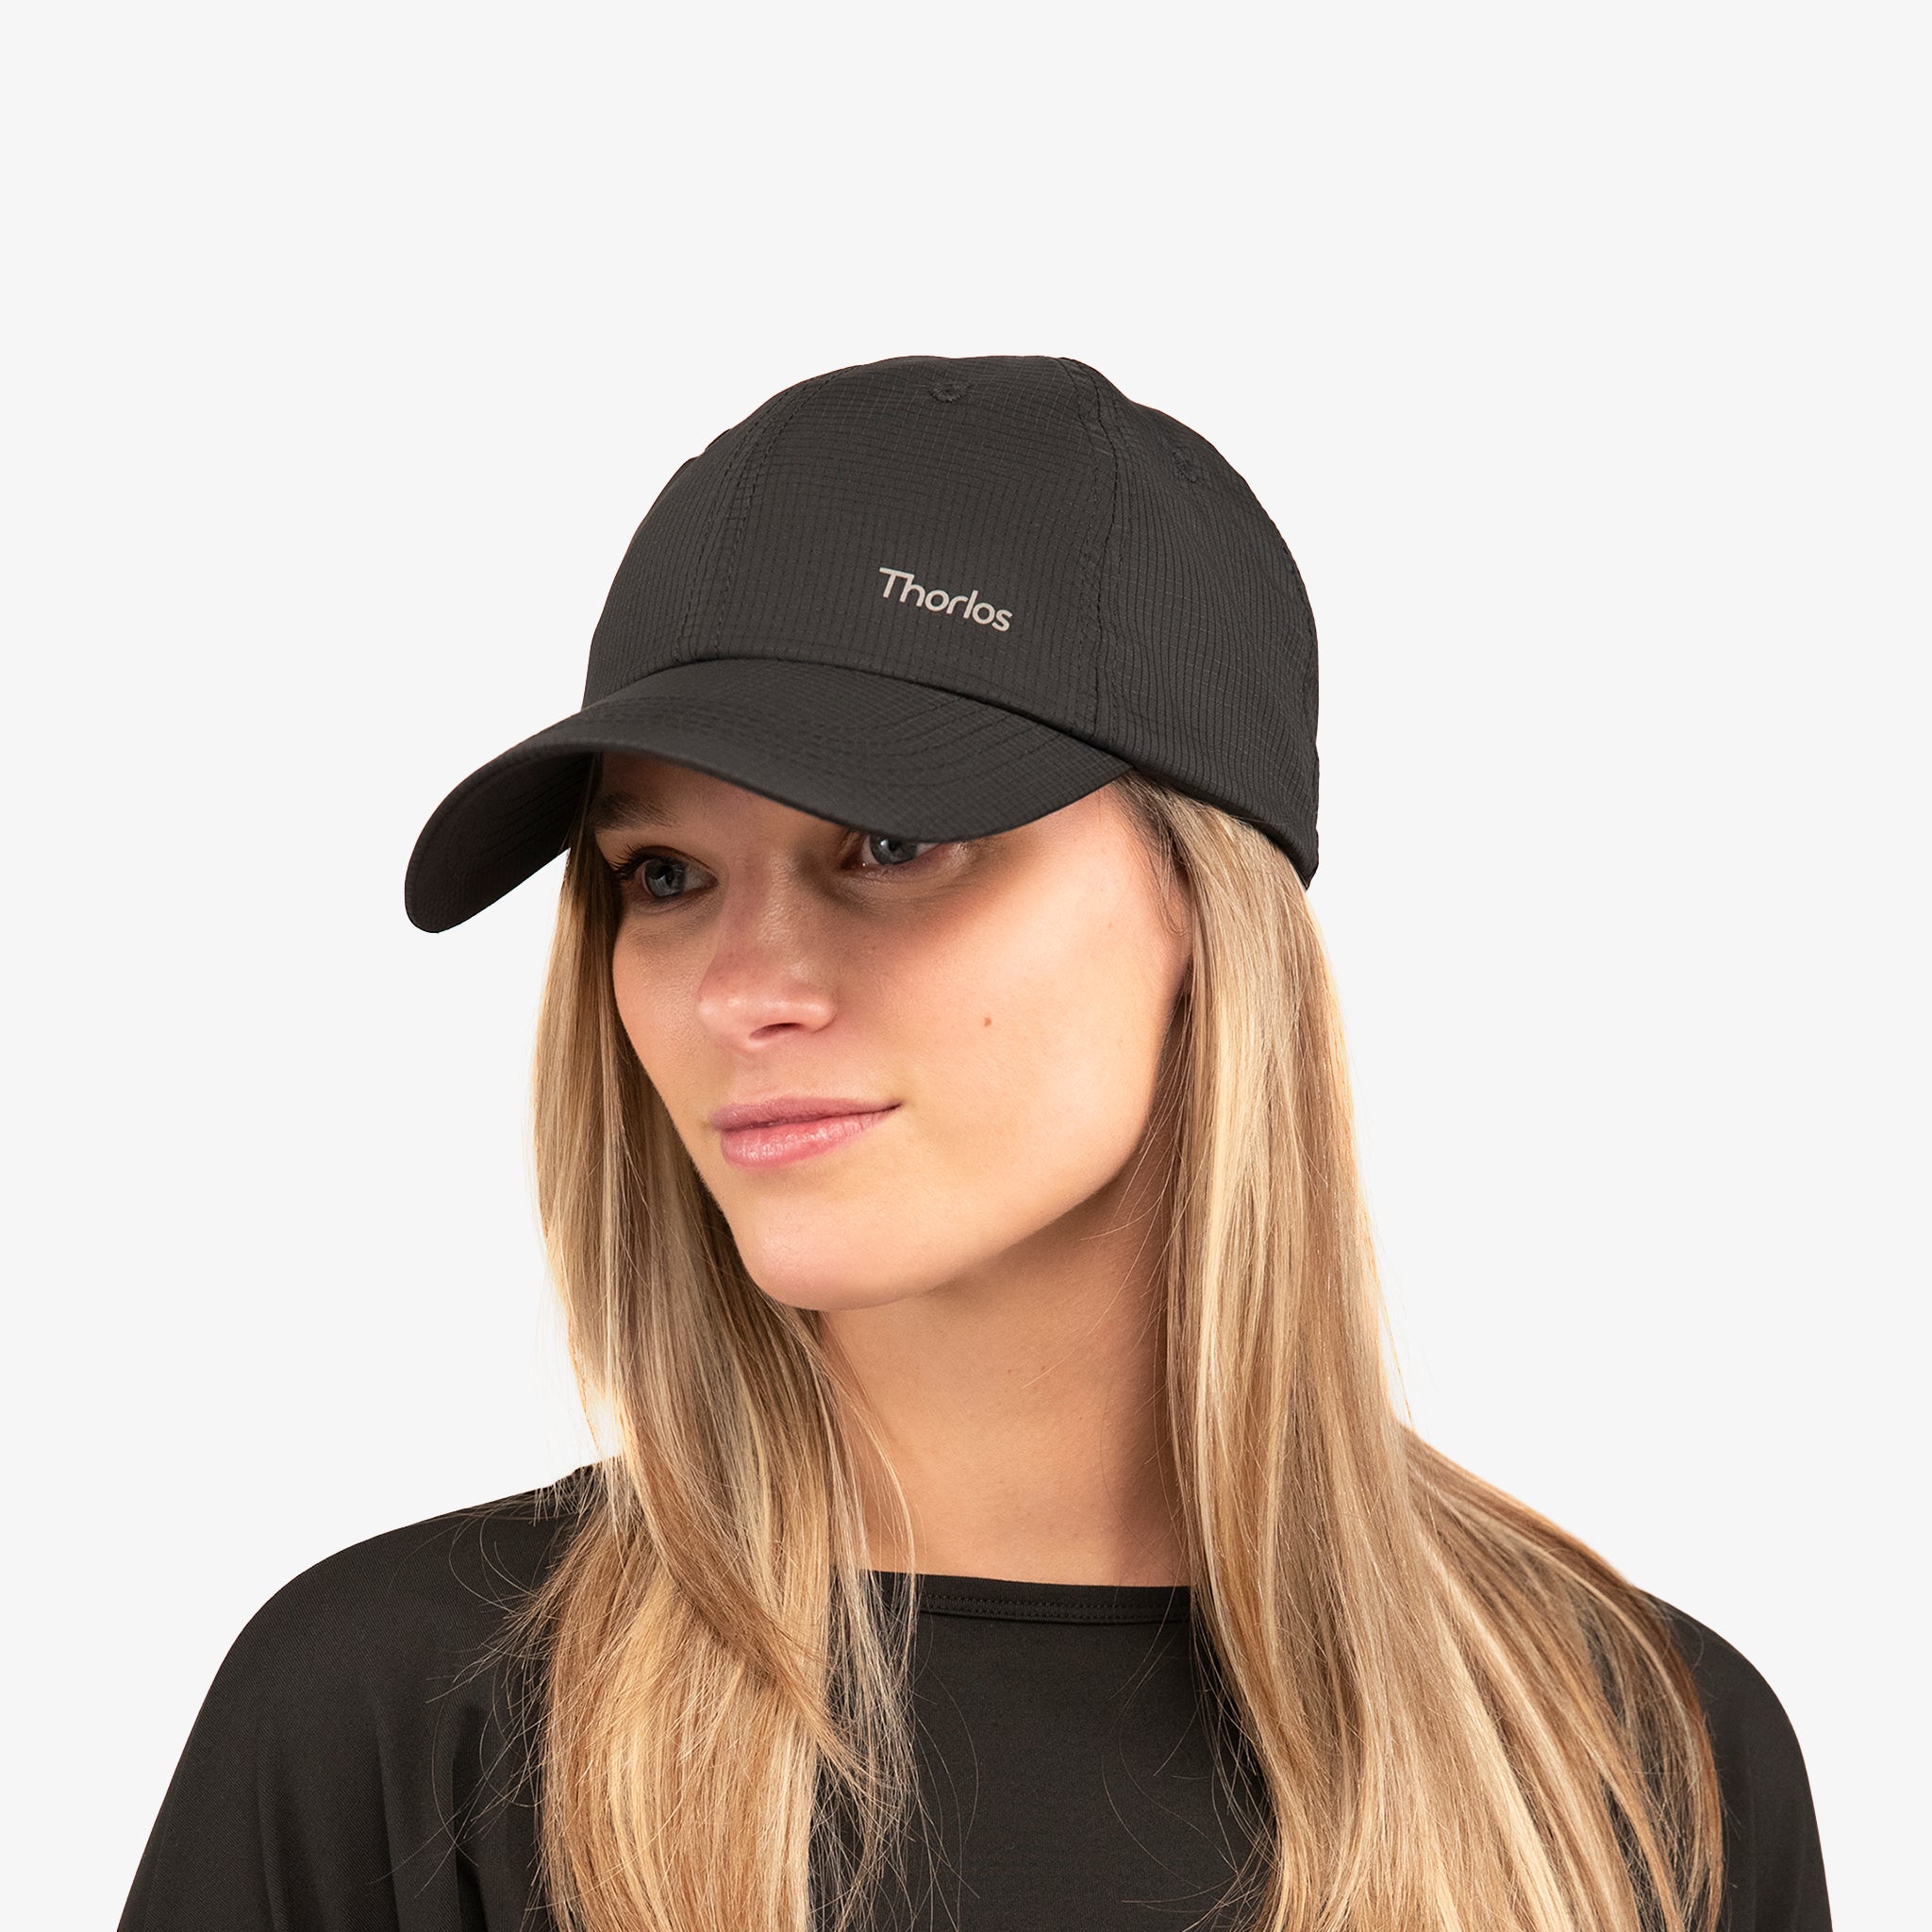 Thorlo - Thorlo Unisex Adjustable Hat